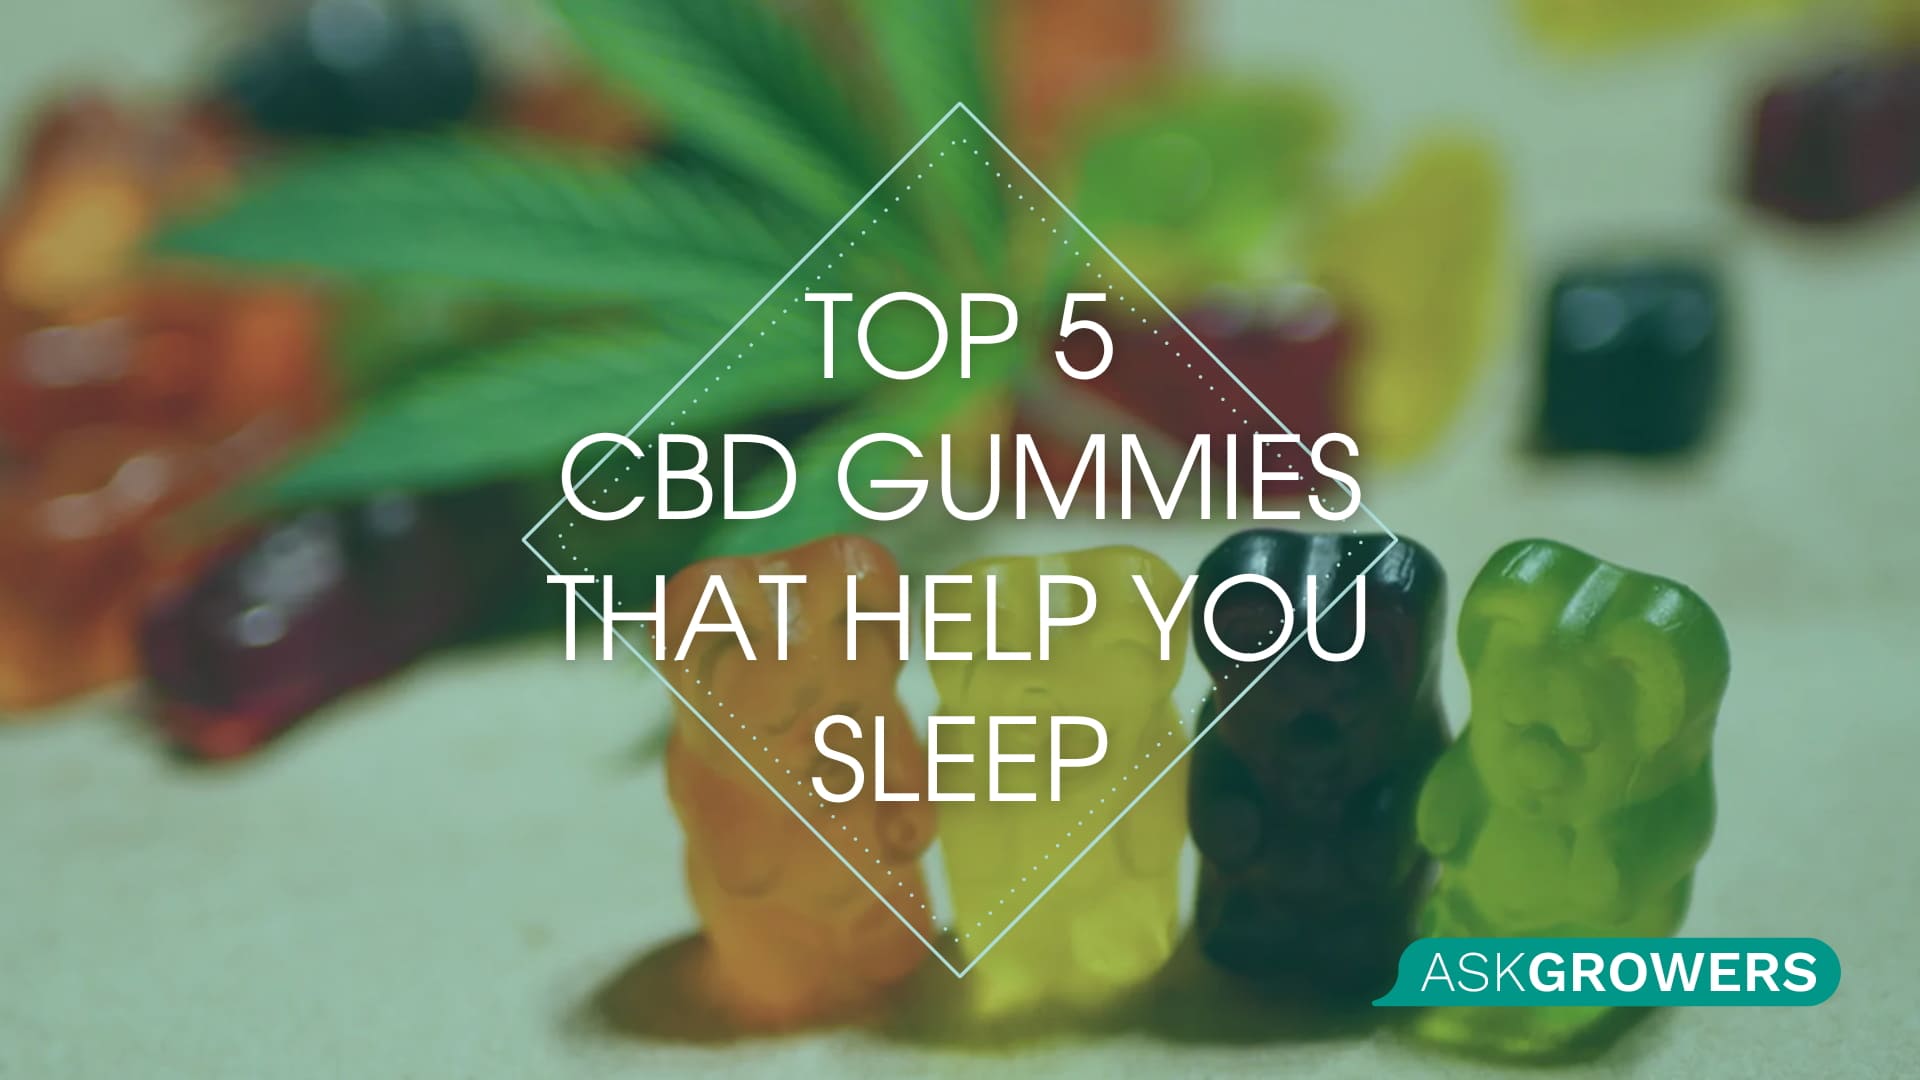 Top 5 CBD Gummies That Help You Sleep